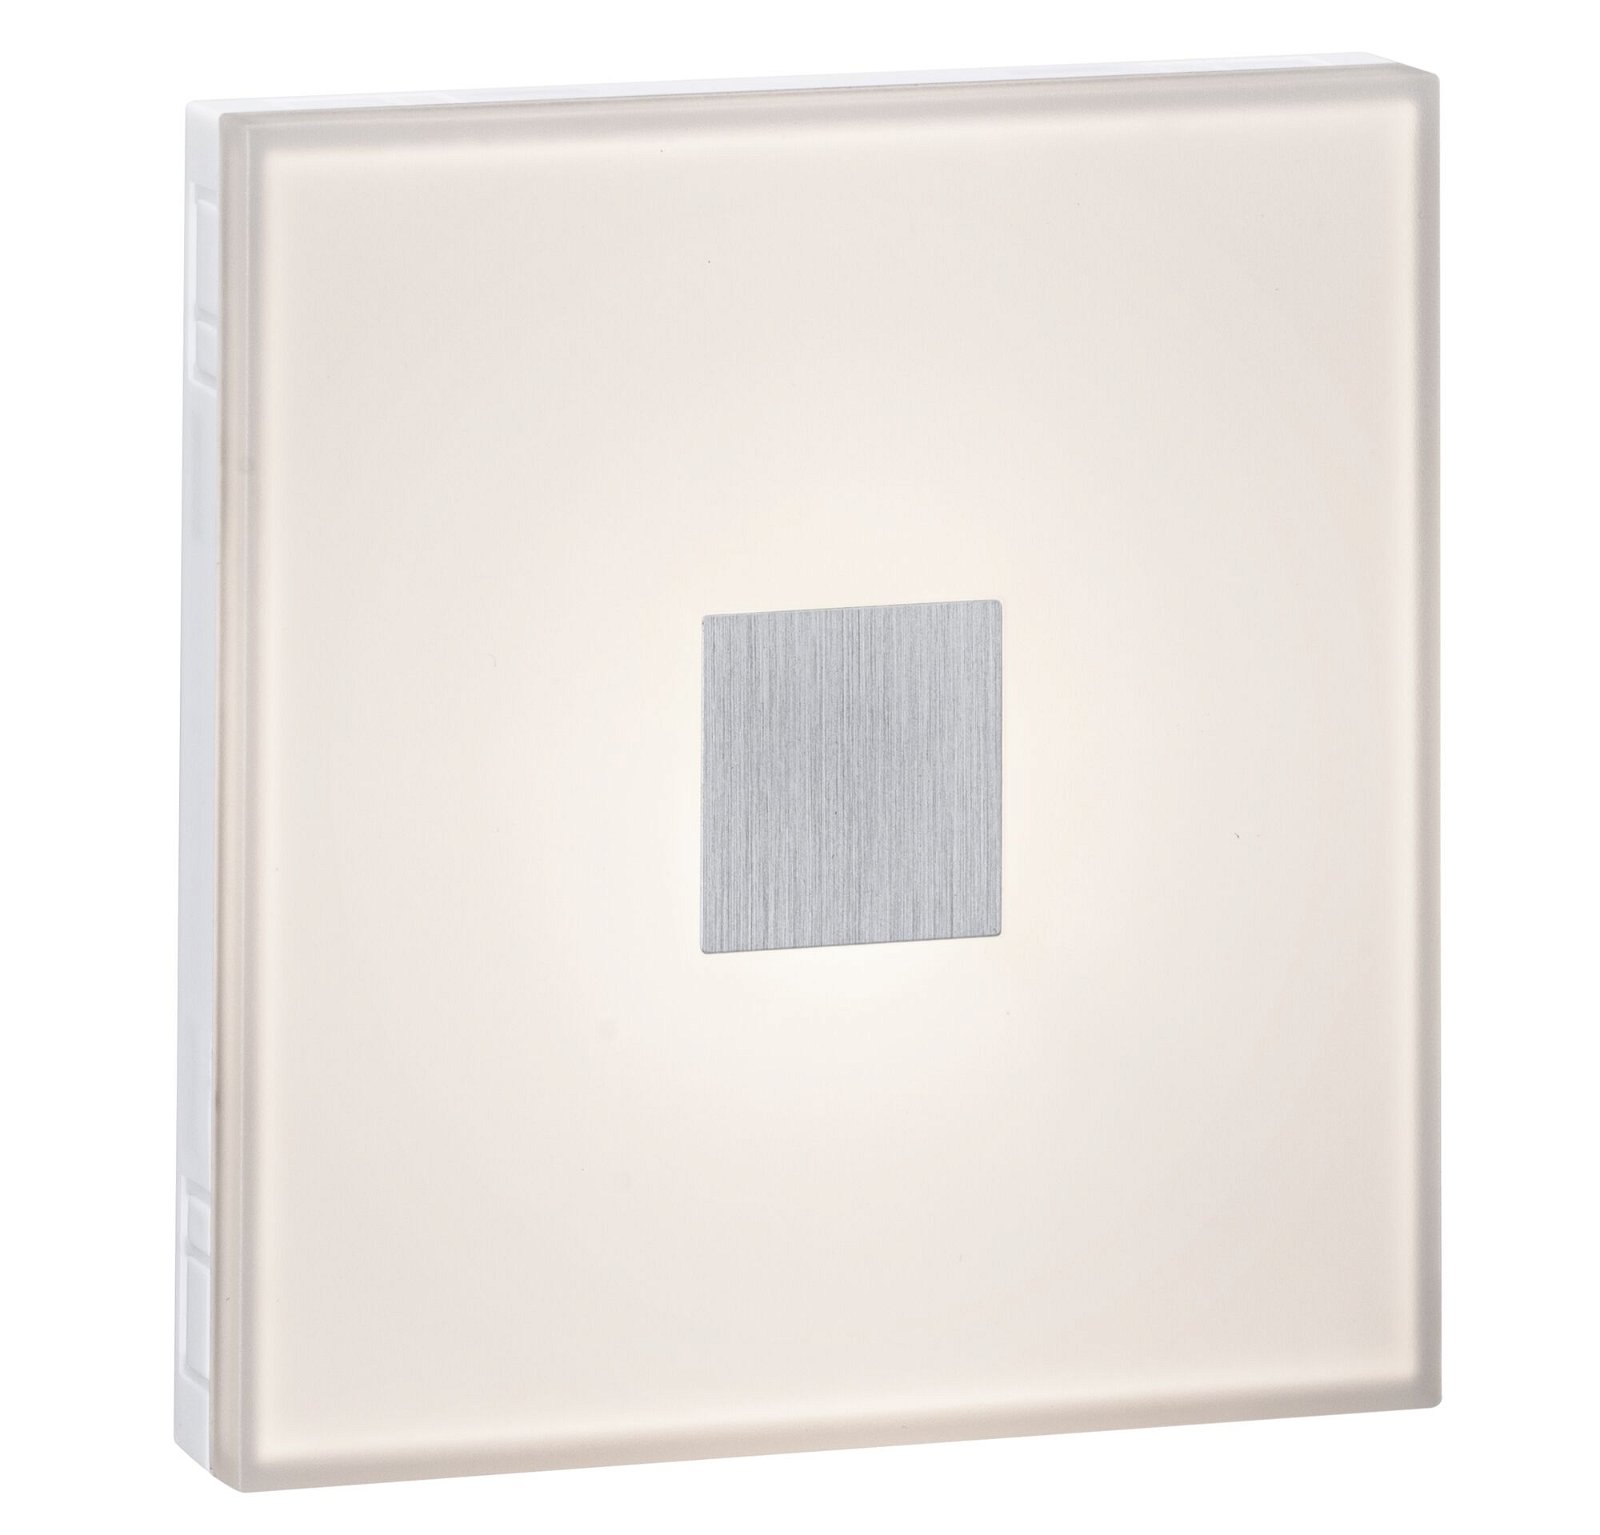 LumiTiles LED Tiles Square Single tile IP44 100x10mm 12lm 12V 0,75W dimmable RGBW White Plastic/Aluminium